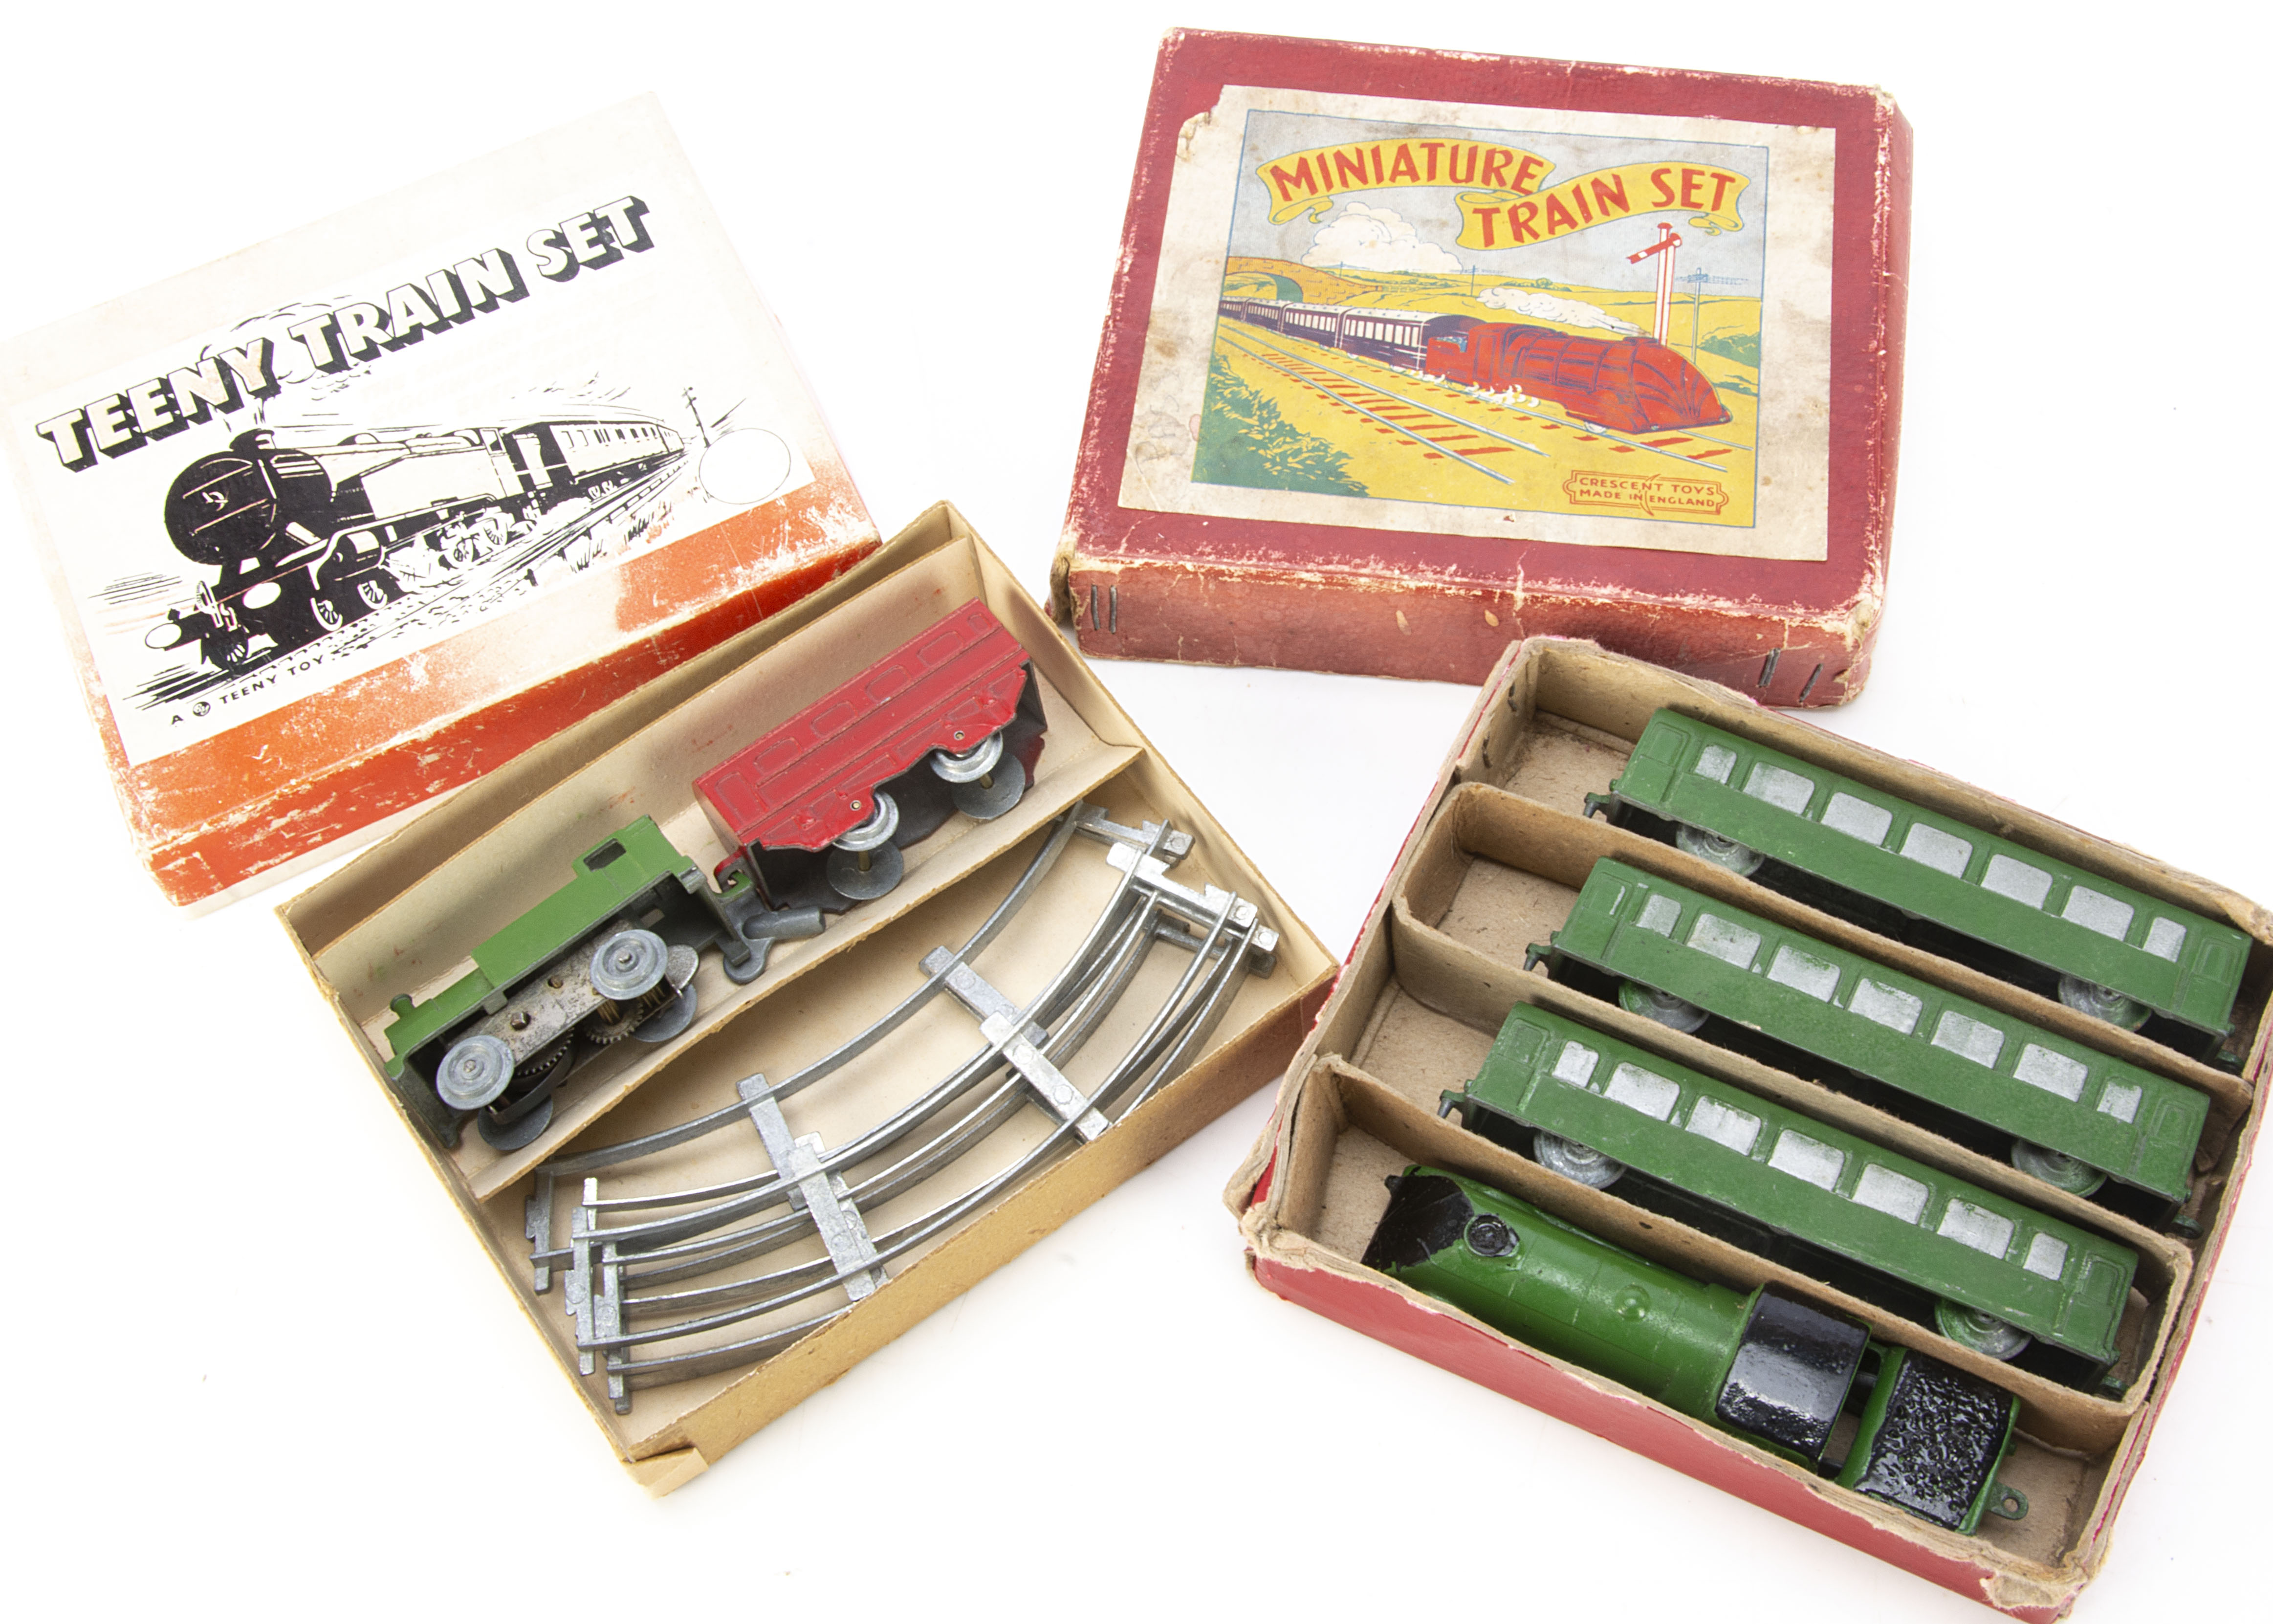 Teeny Toy Diecast Clockwork Train Set, comprising Loco, Coach, six piece circular track, original